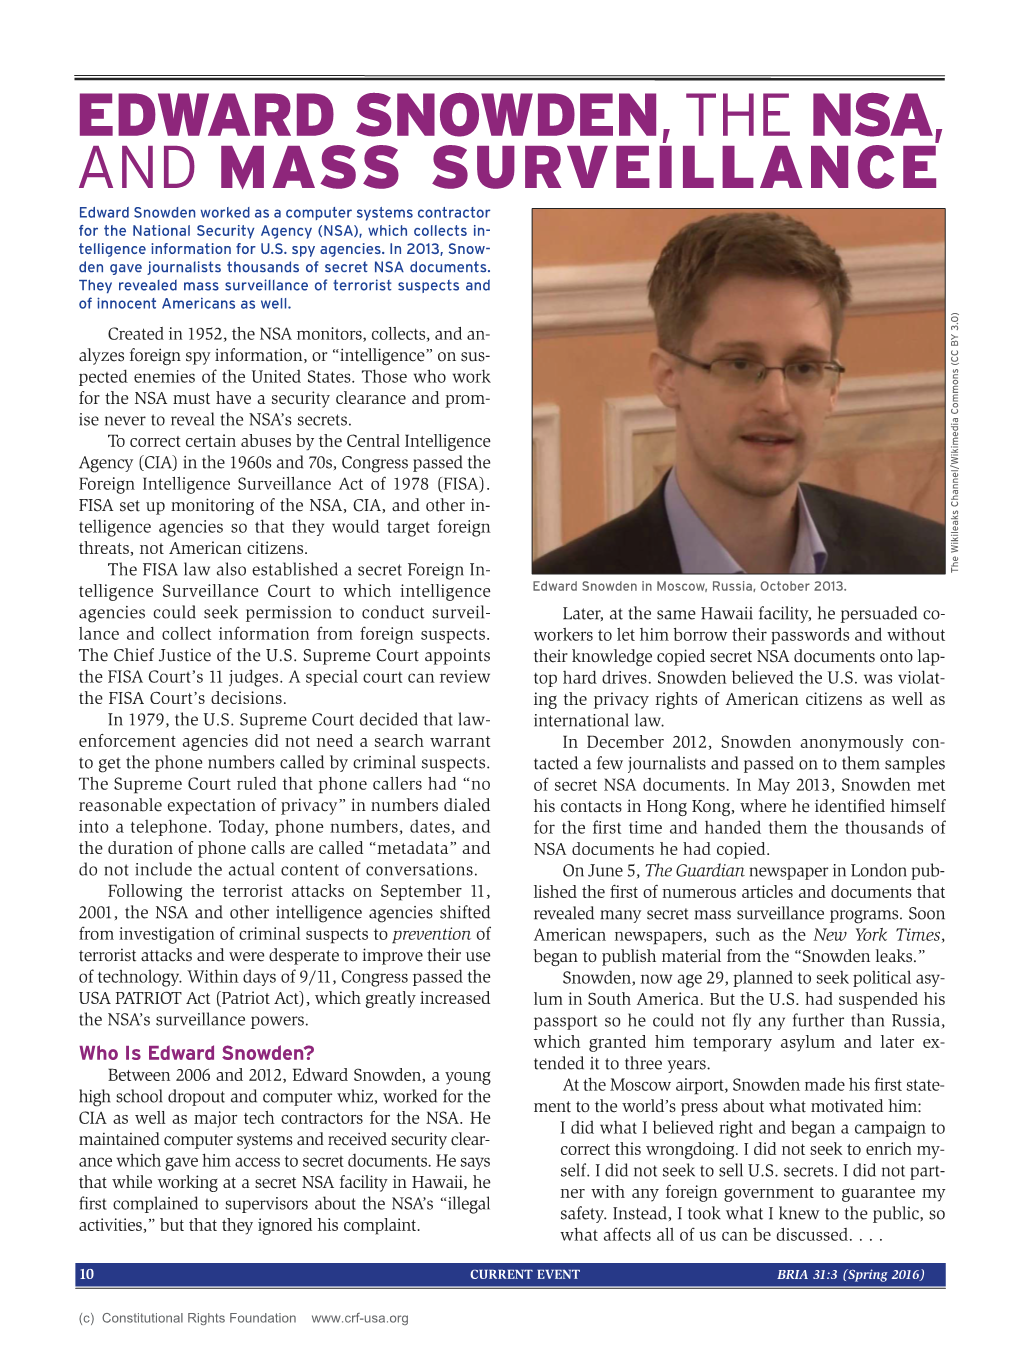 Edward Snowden, the Nsa, and Mass Surveillance